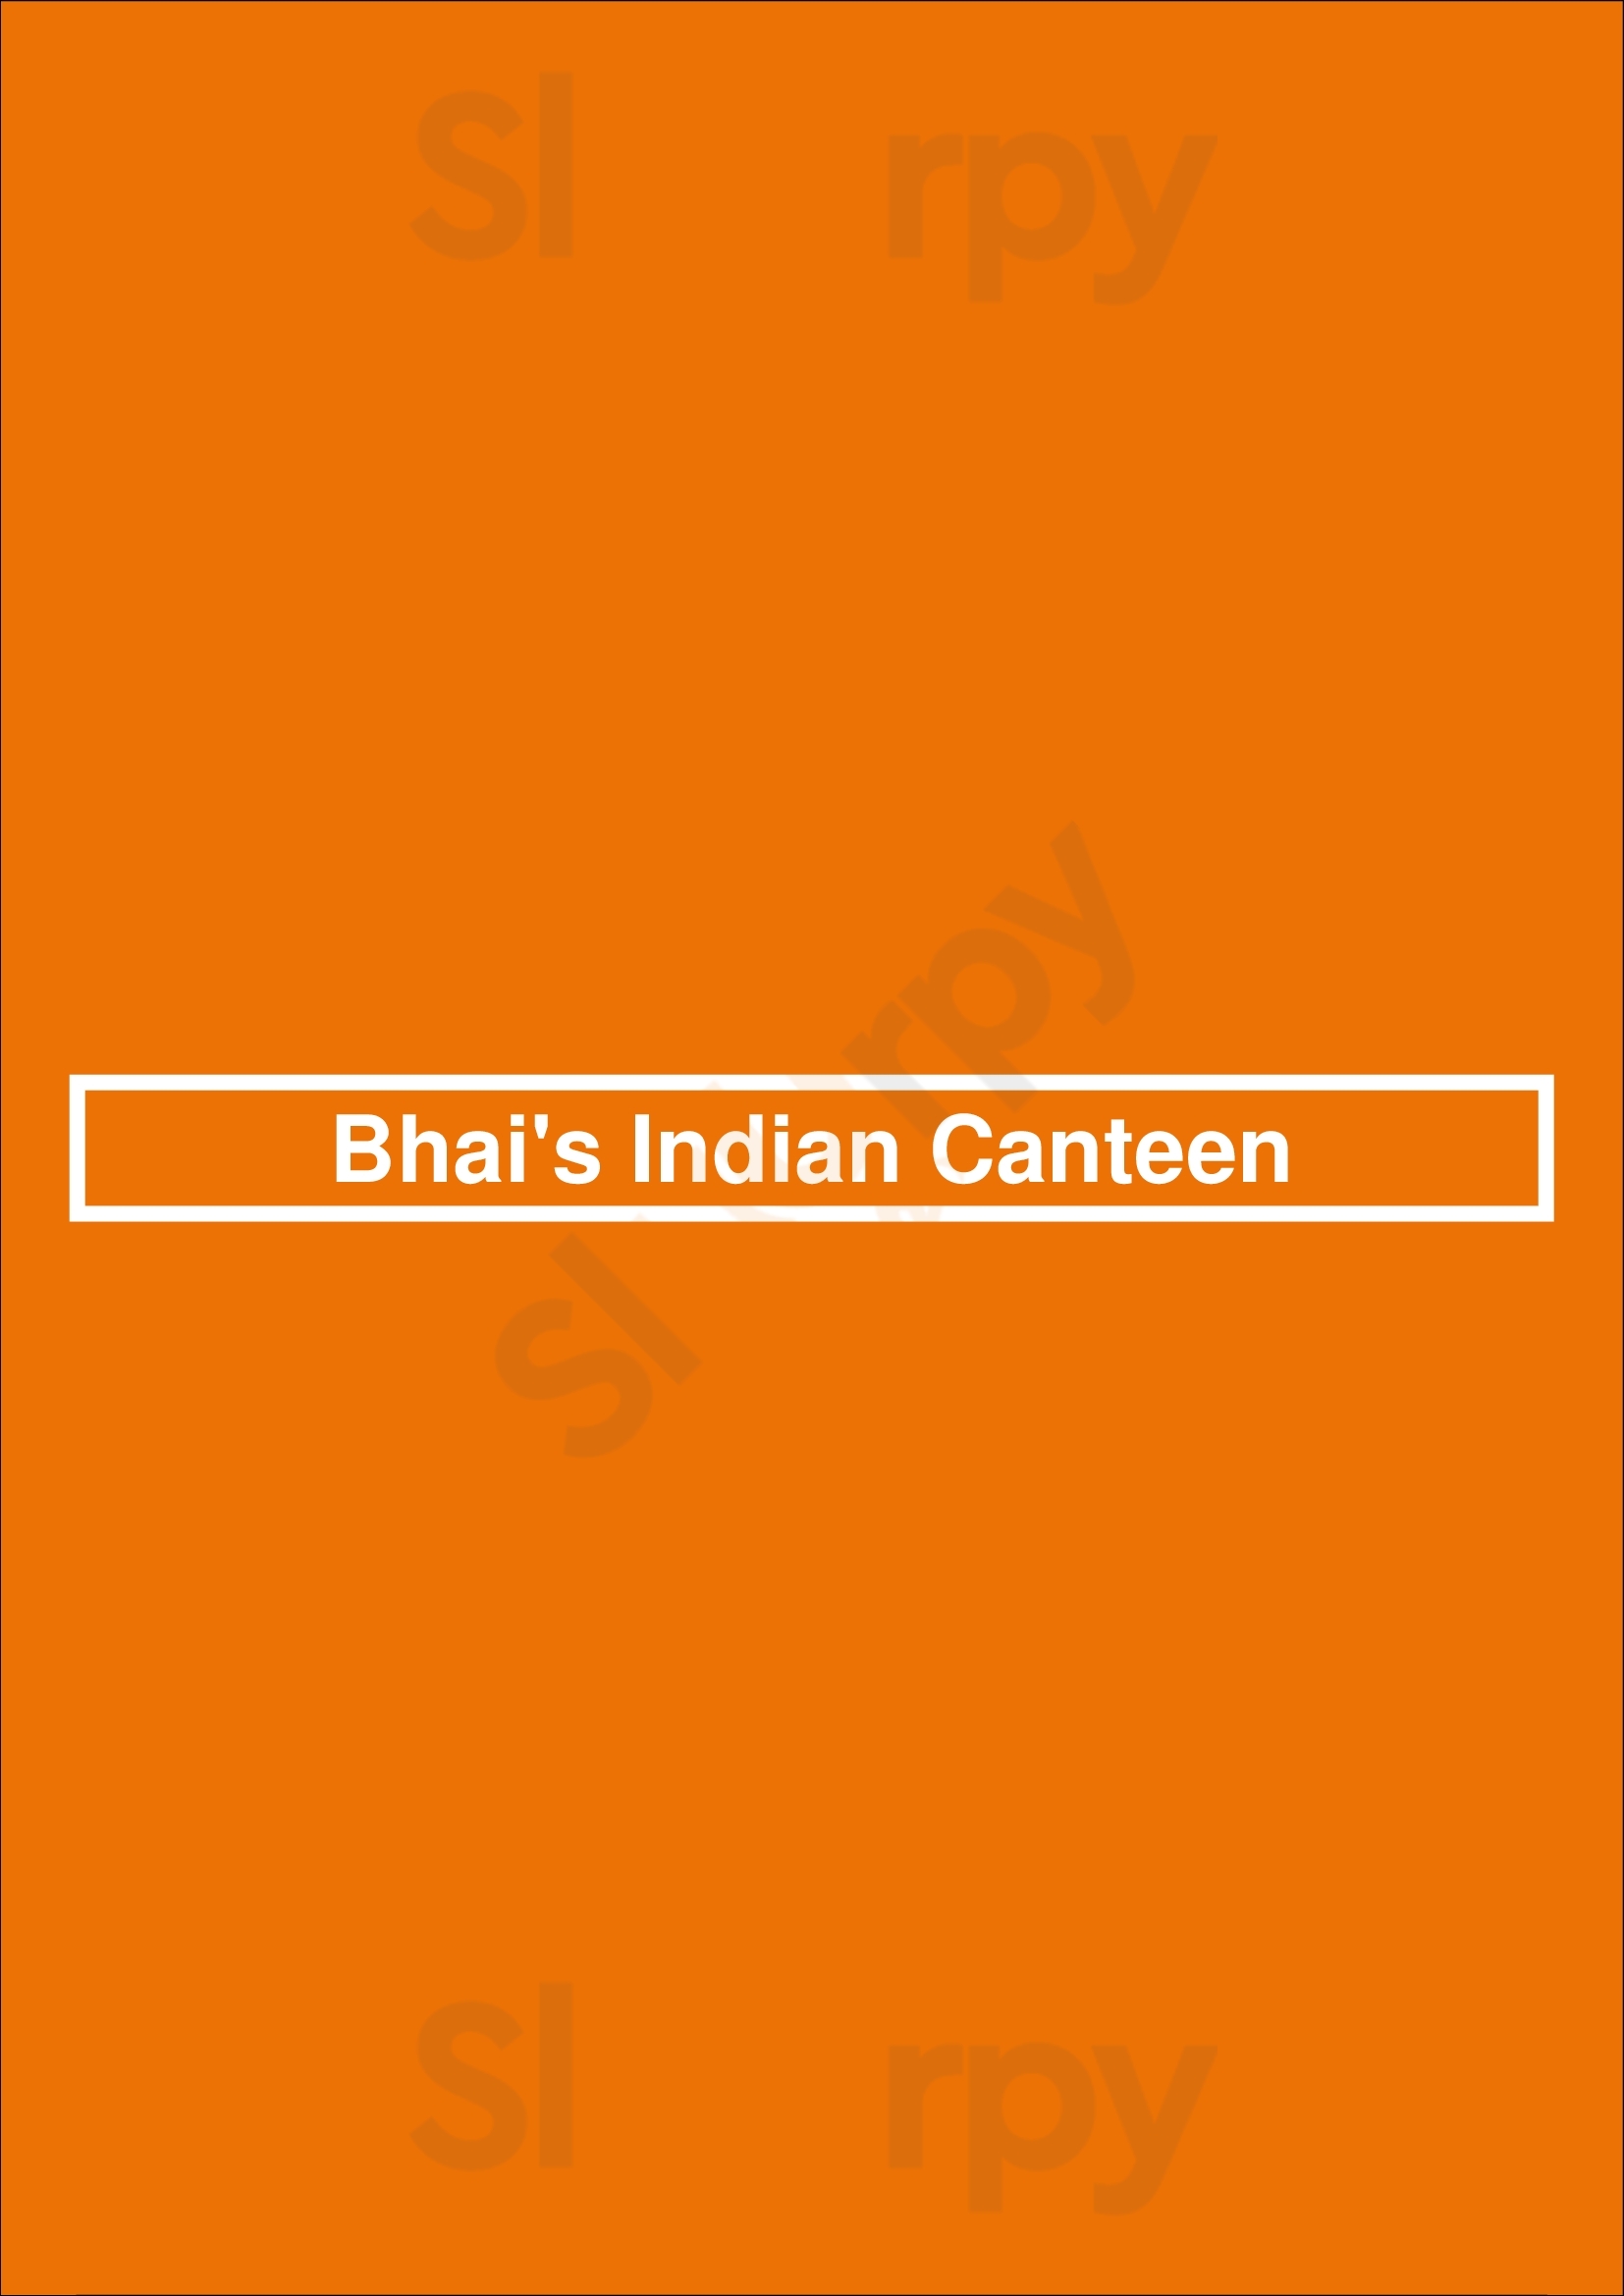 Bhai's Indian Canteen Richmond Hill Menu - 1